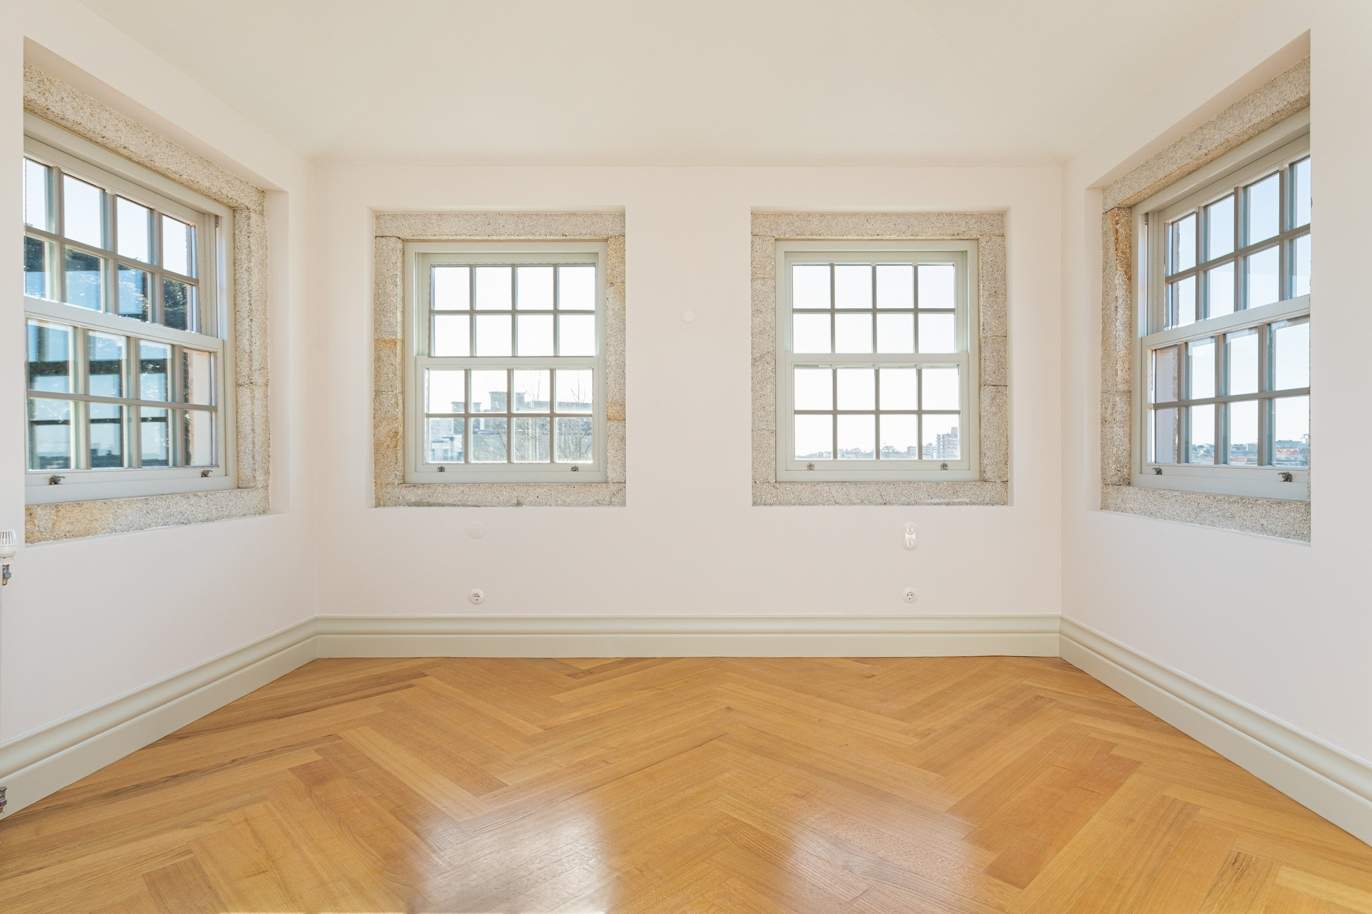 Venda apartamento duplex novo, empreendimento de luxo, Cedofeita, Porto_165745